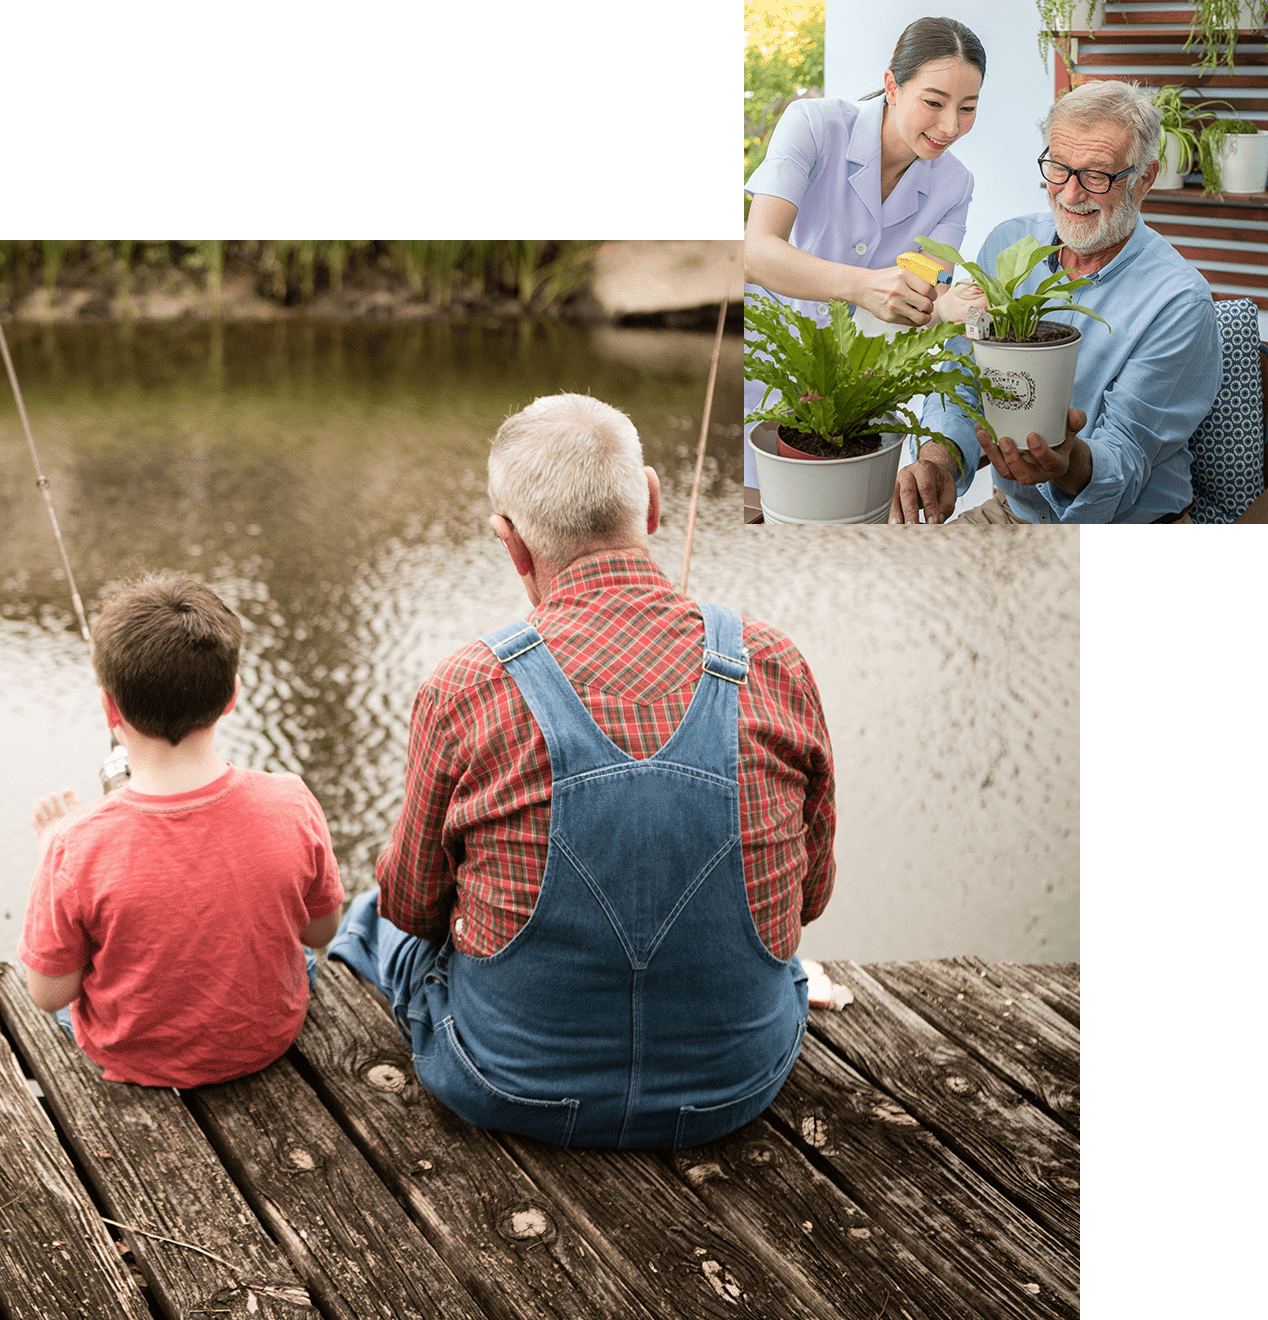 Grandfather and grandchild fishing, senior with caregiver gardening